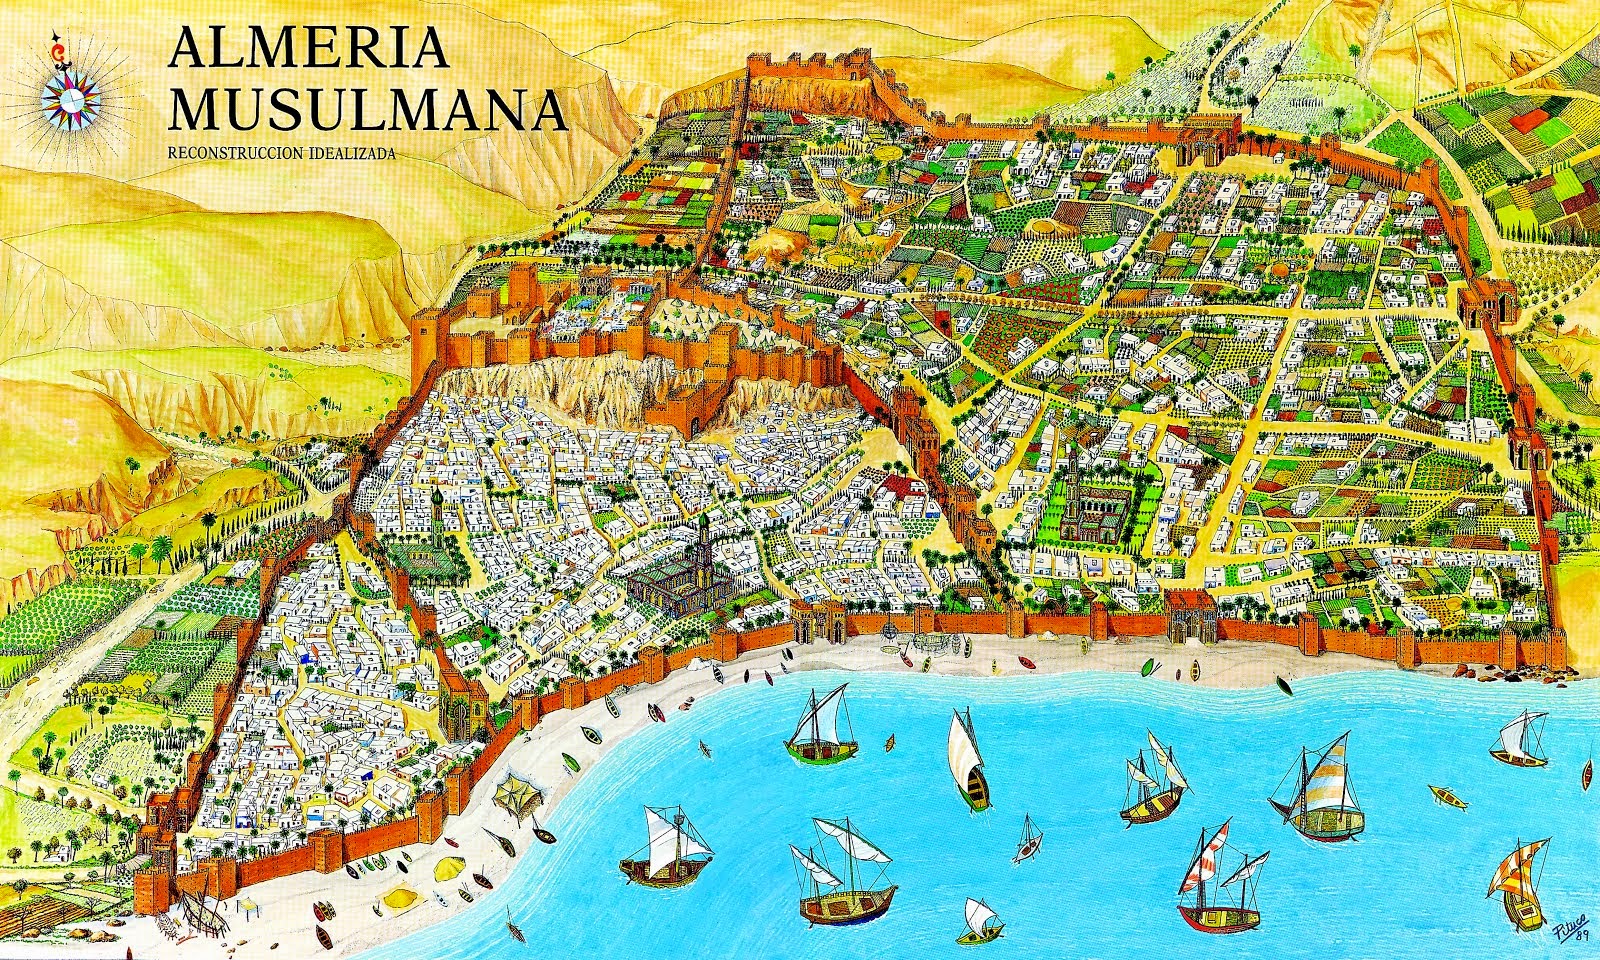 Mejorando Almeria imagen Almeria